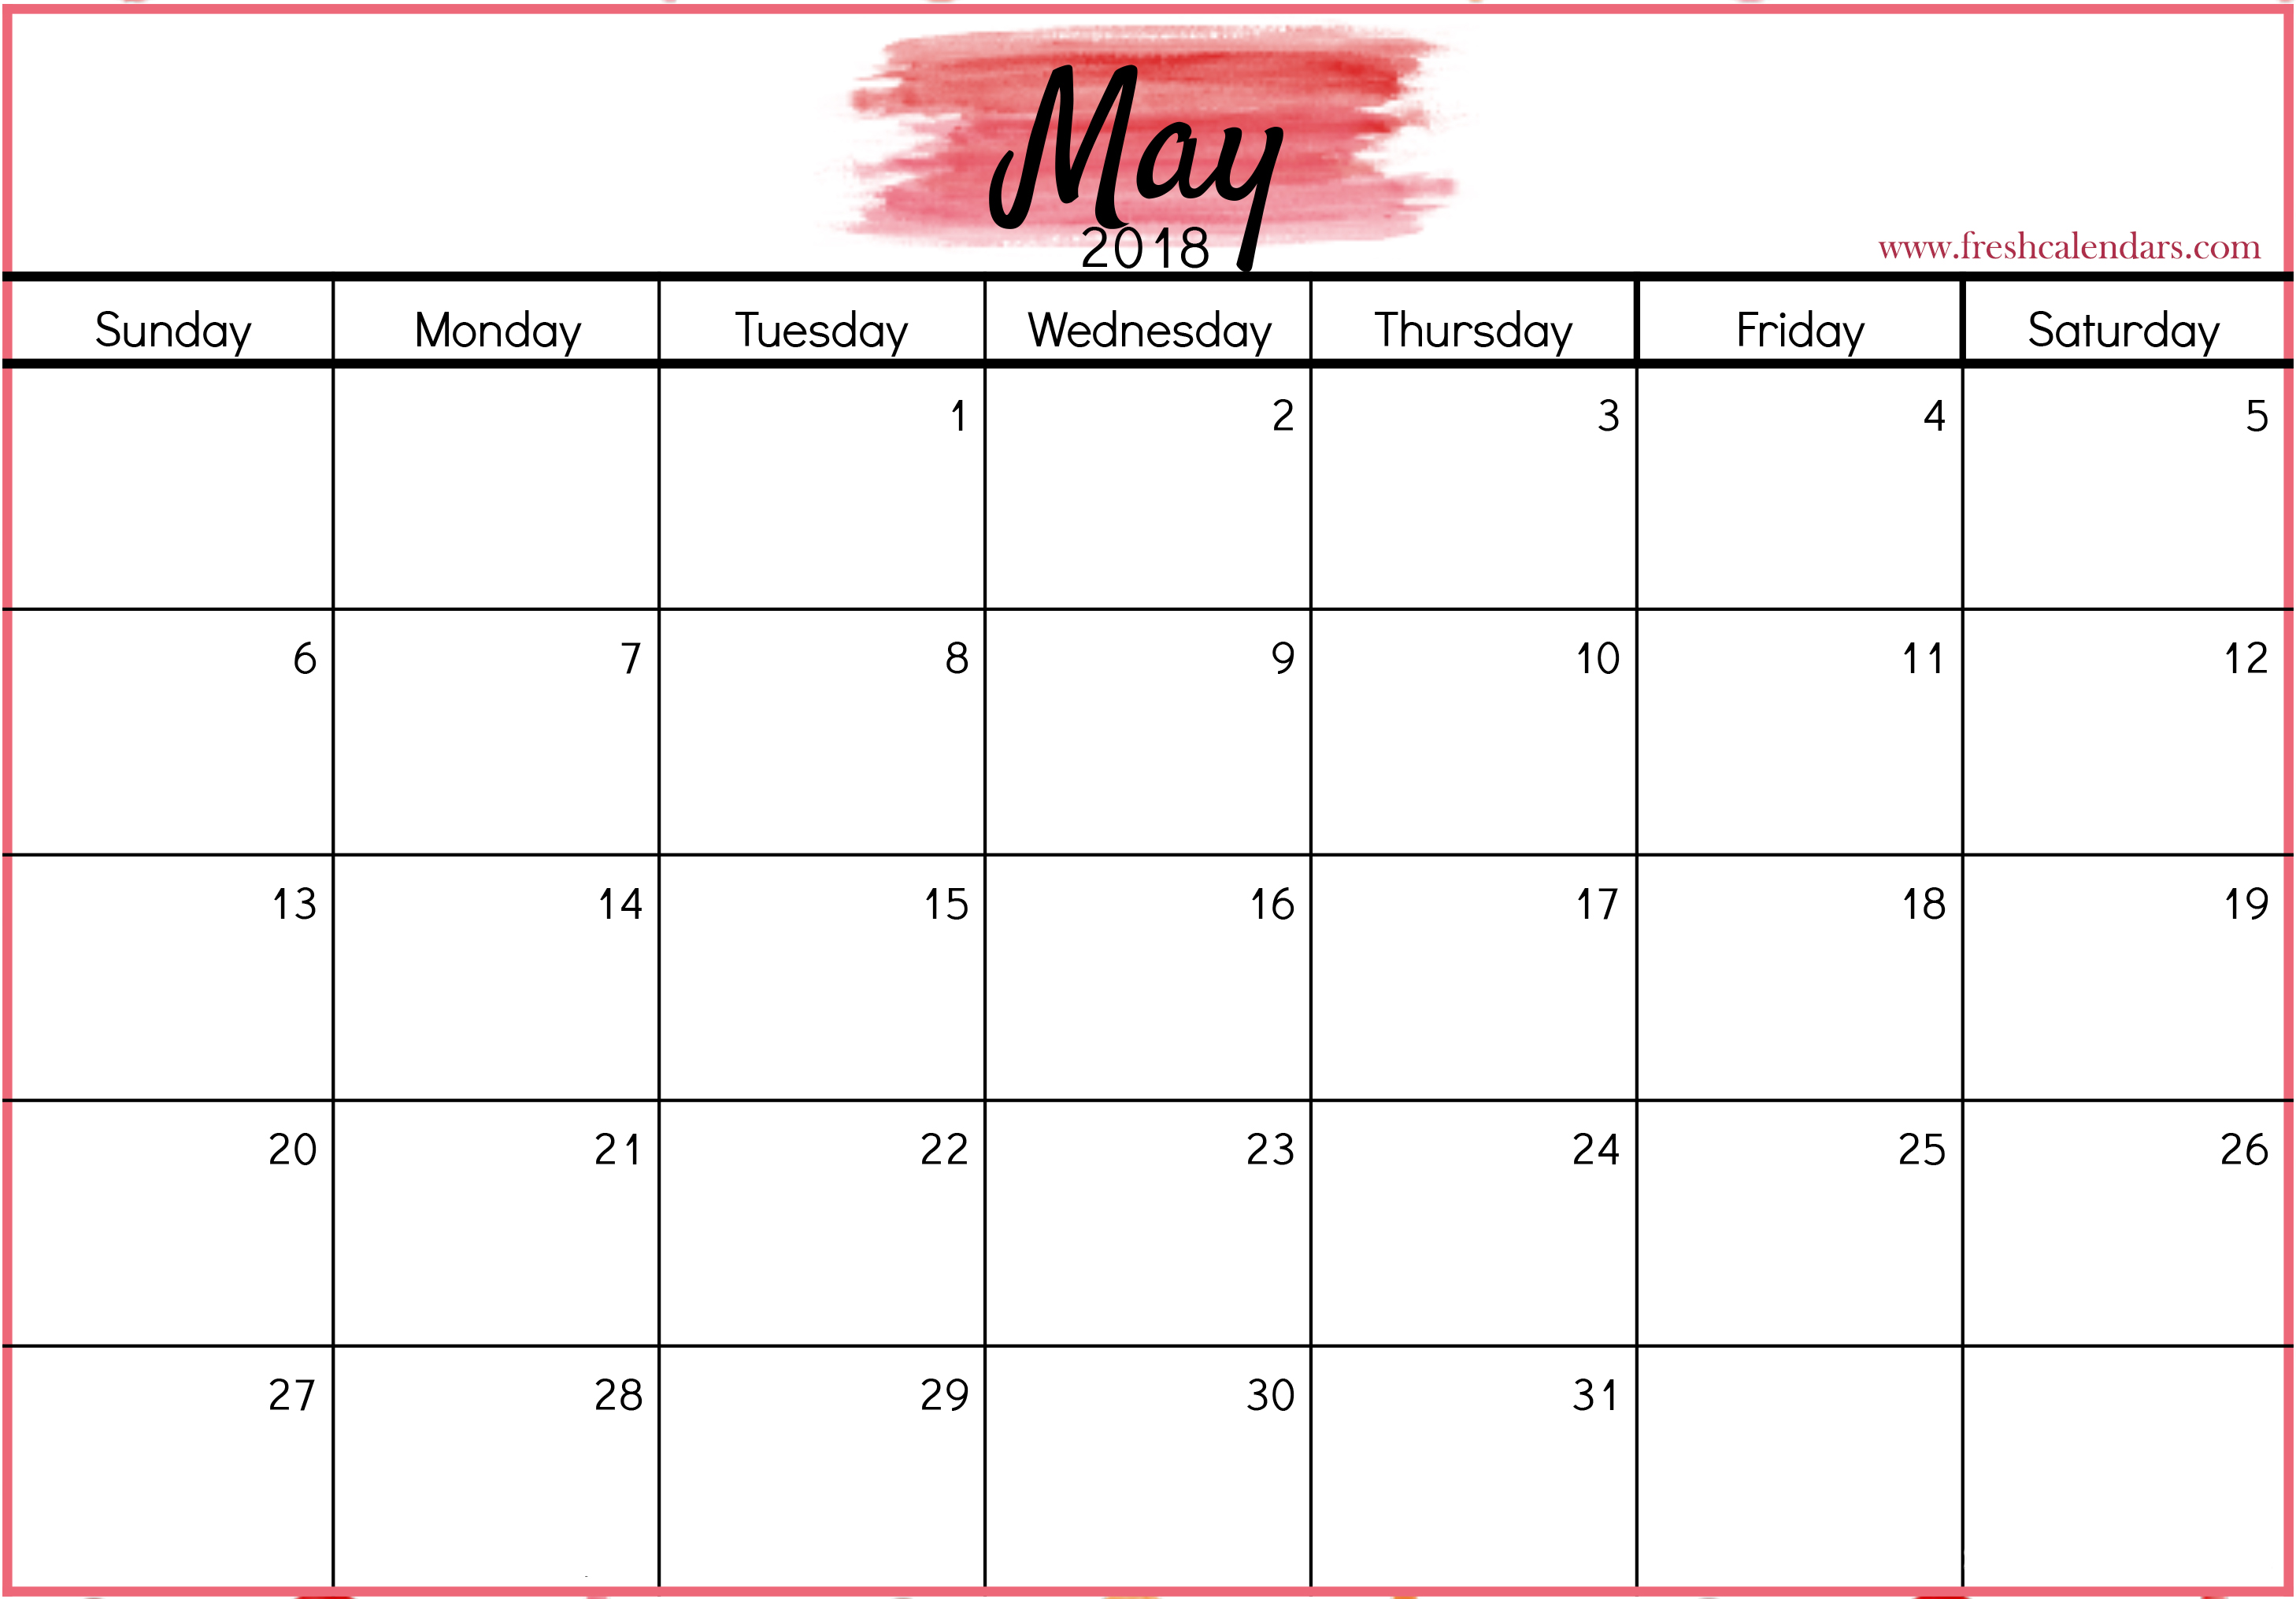 calendar-may-2018-uk-bank-holidays-excel-pdf-word-templates